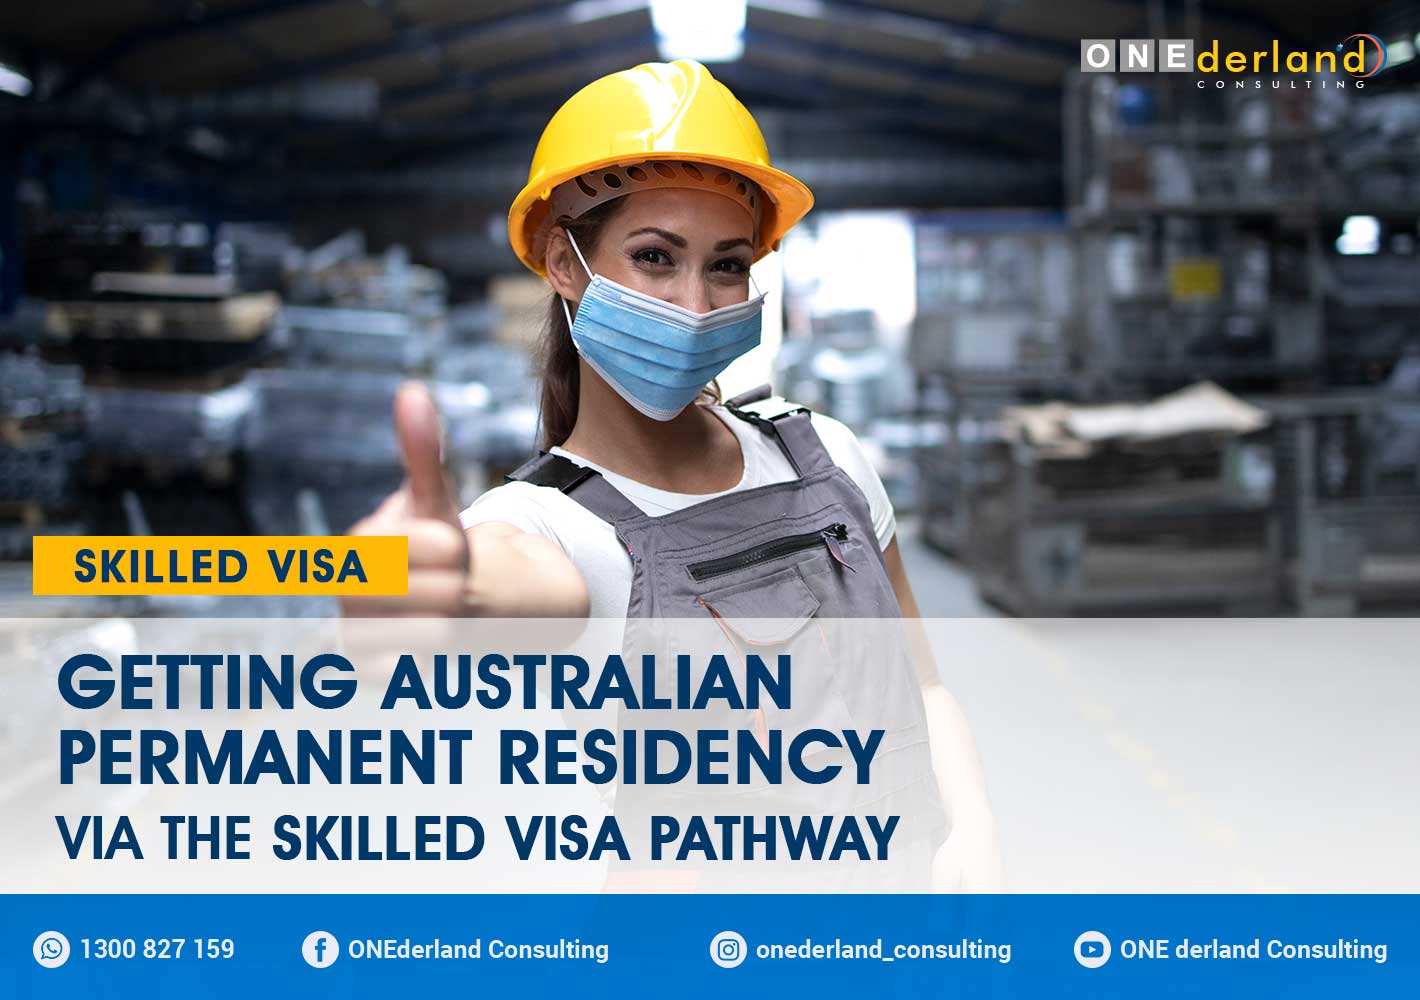 Getting Australian Permanent Residency via Skilled Visa